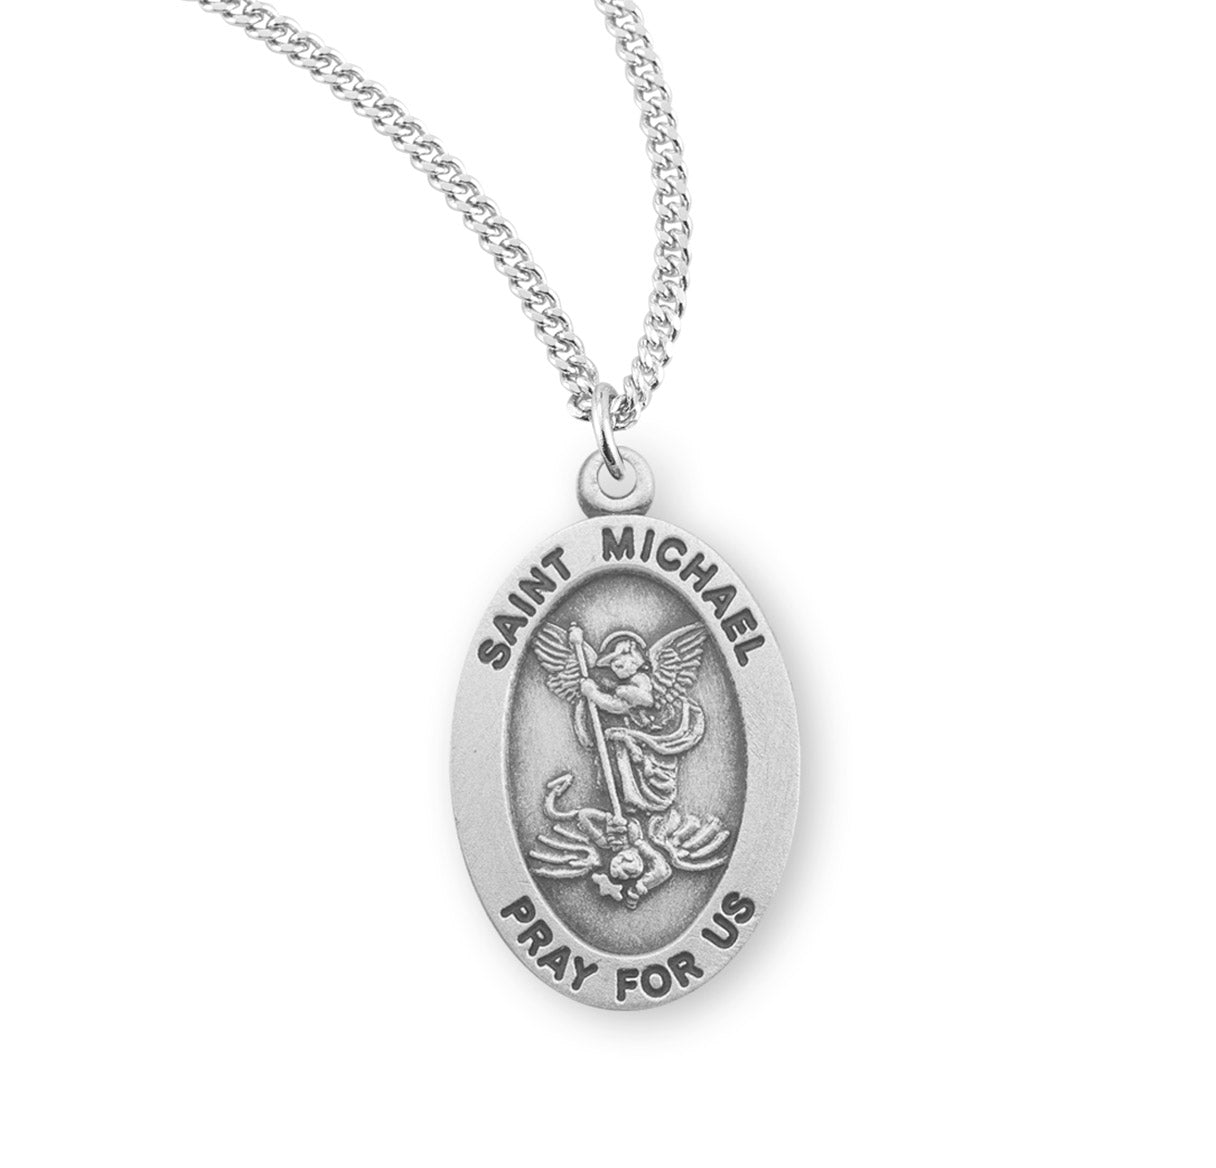 Saint Michael Archangel Oval Sterling Silver Medal